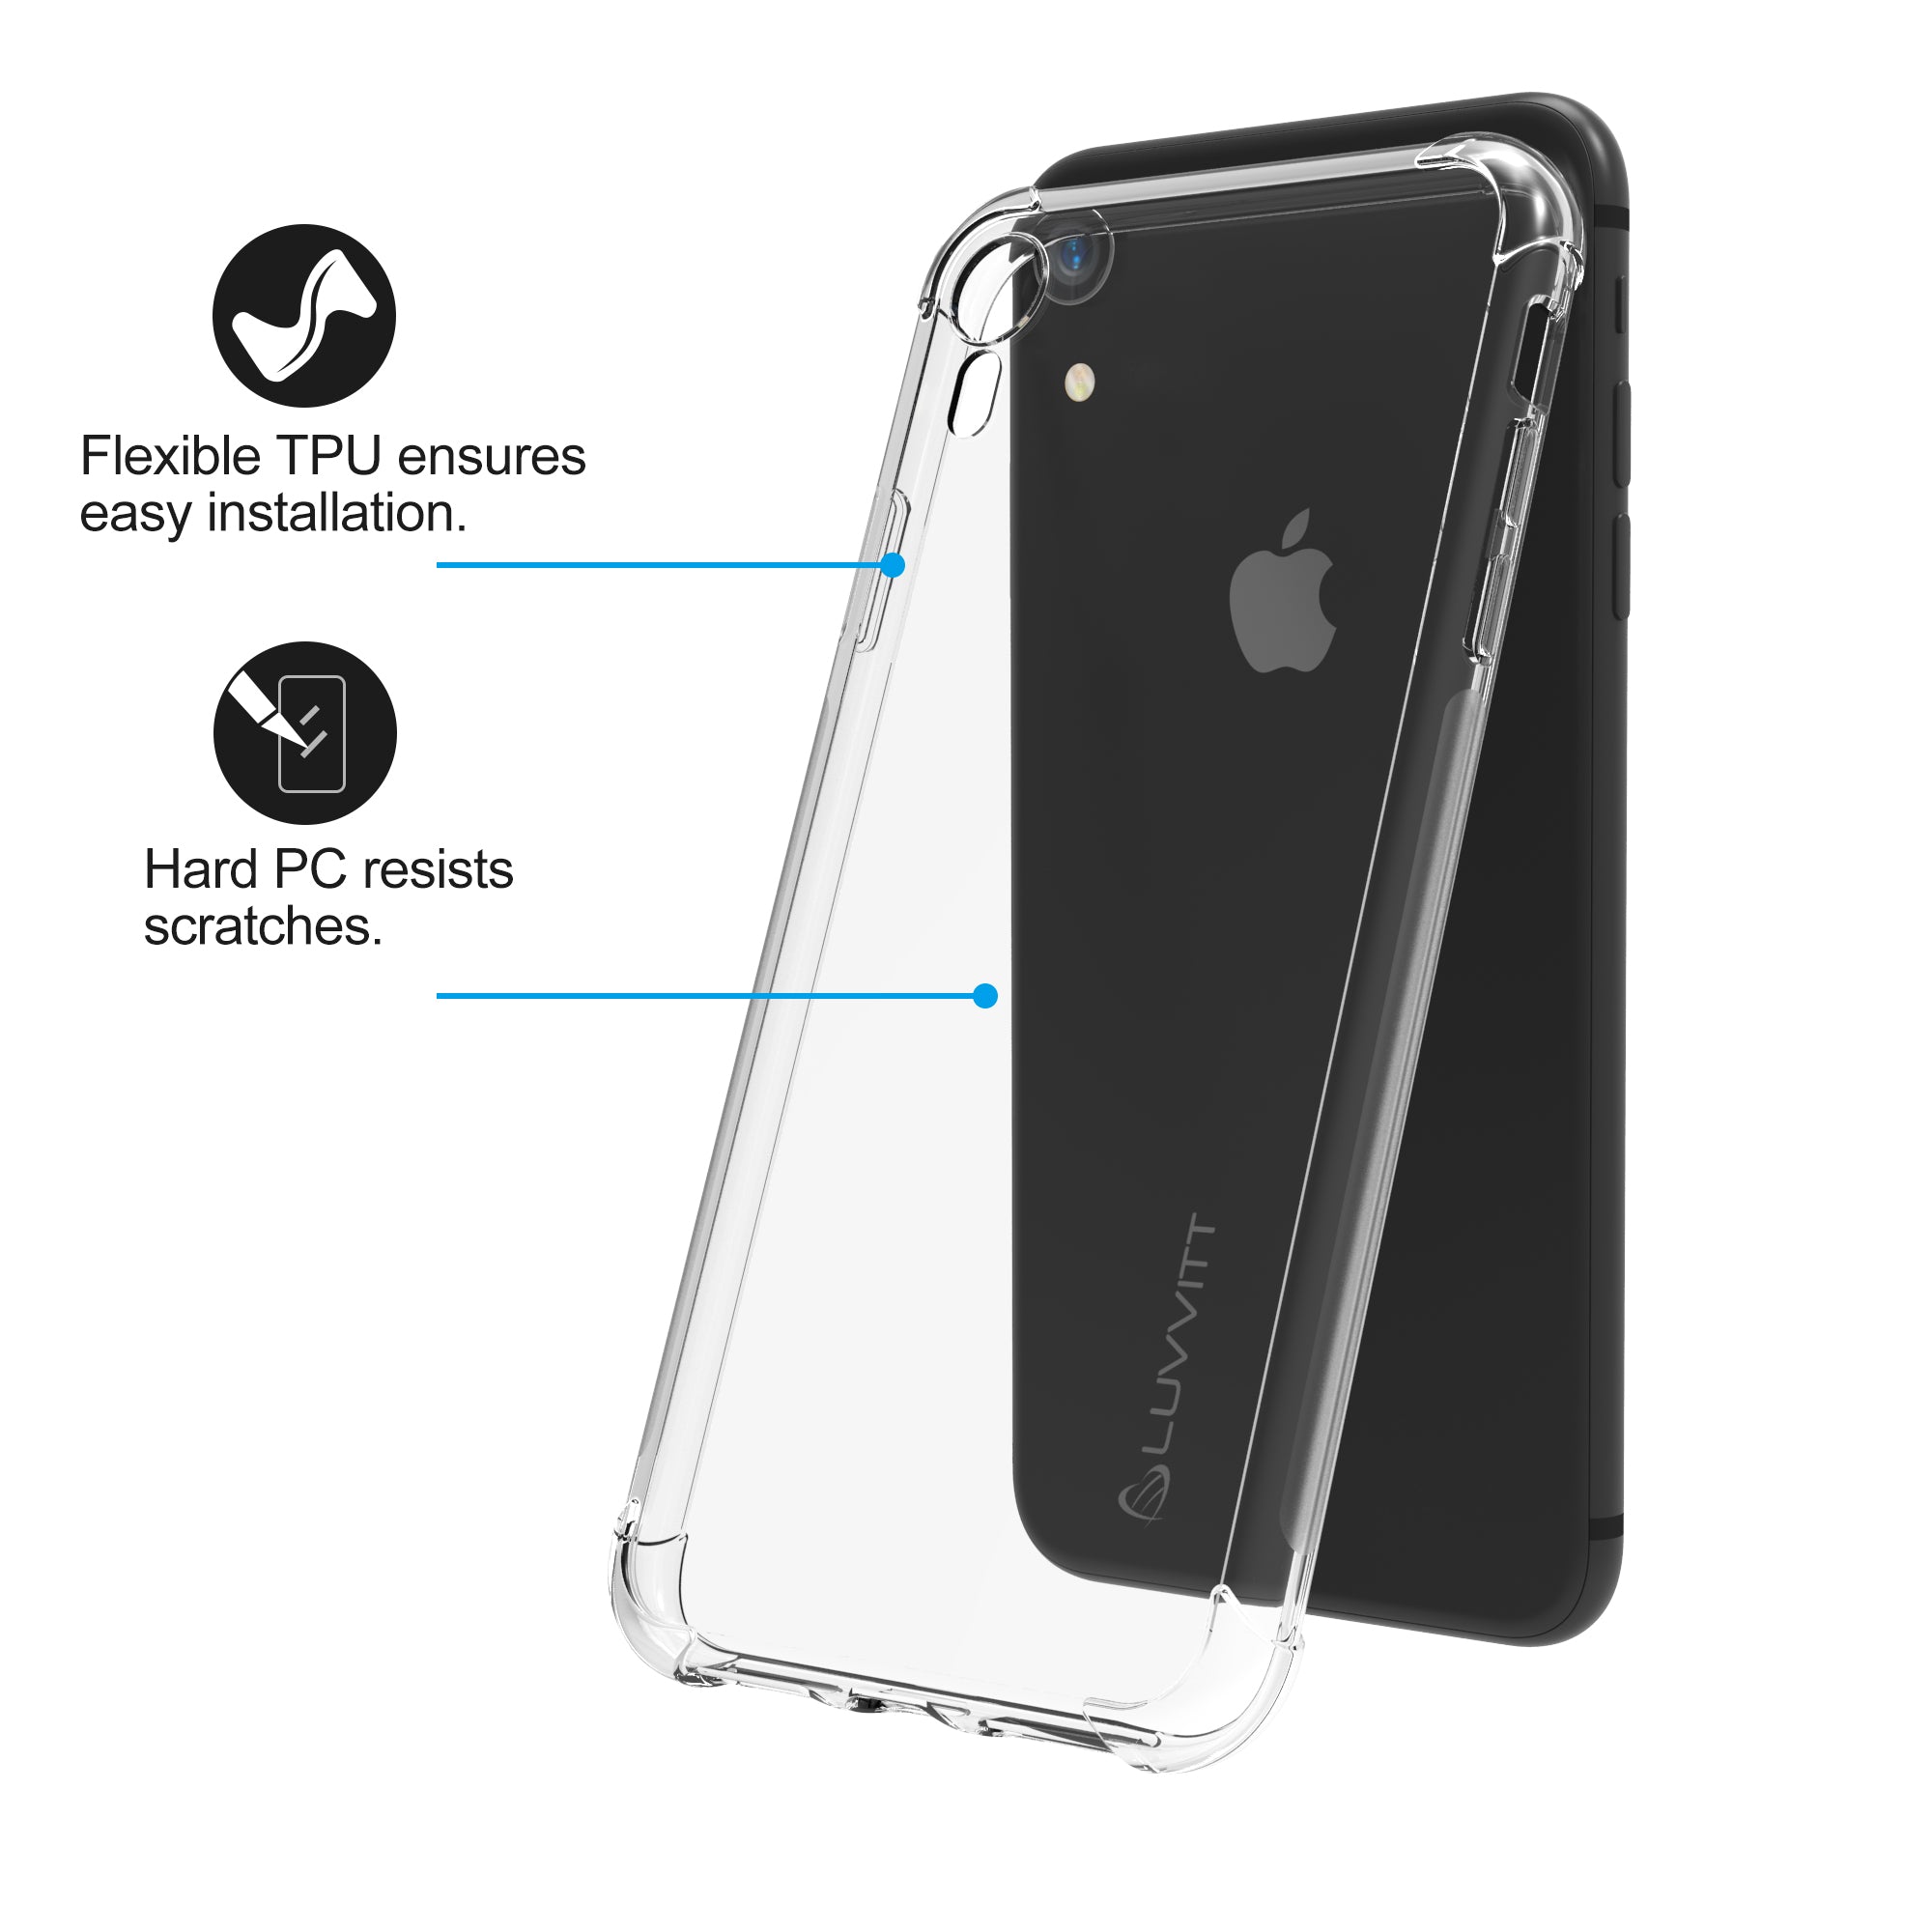 Luvvitt iPhone XR Case Clear Grip Flexible TPU for 6.1 inch Screen 2018